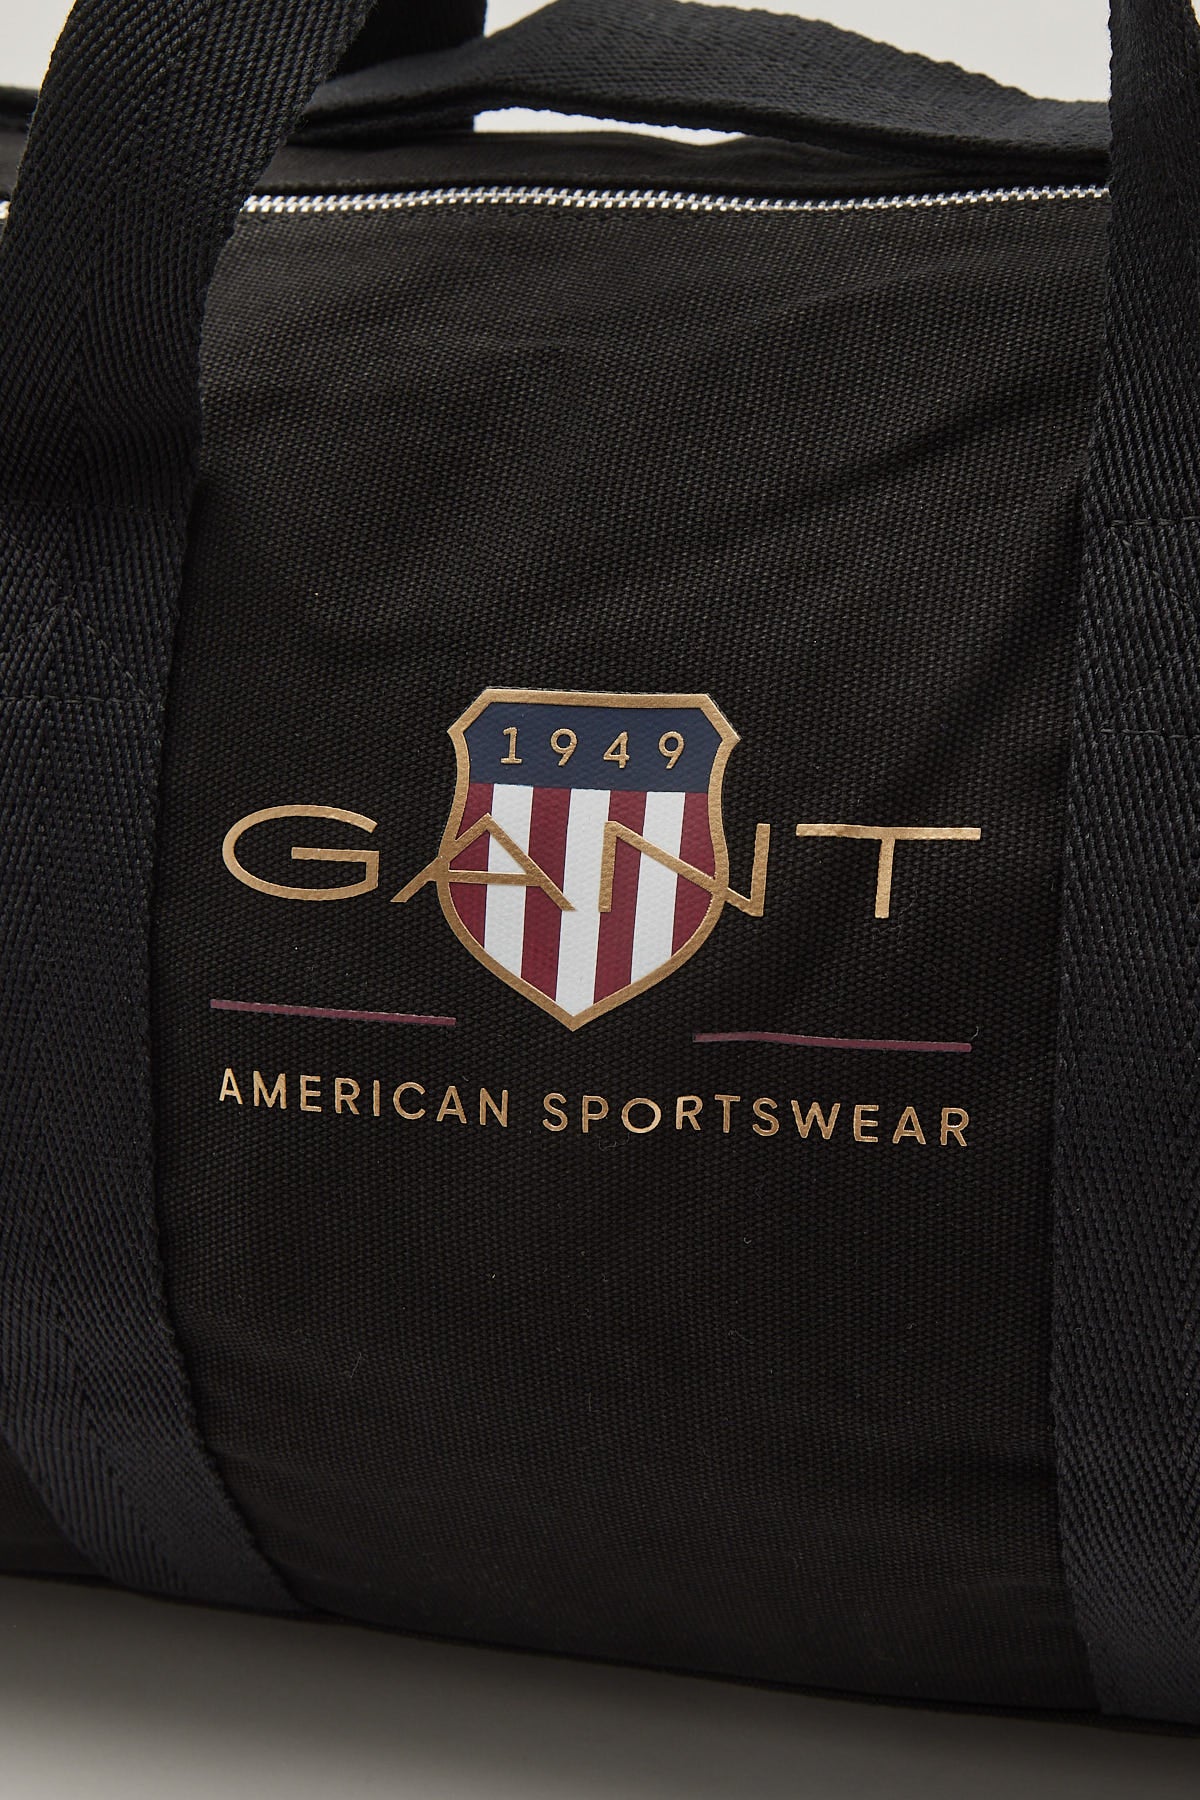 Gant Archive Shield Duffle Bag Black